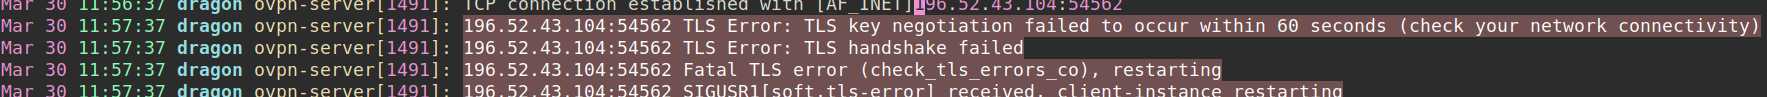 Screenshot of syslog showing failure in HTTPS handshake